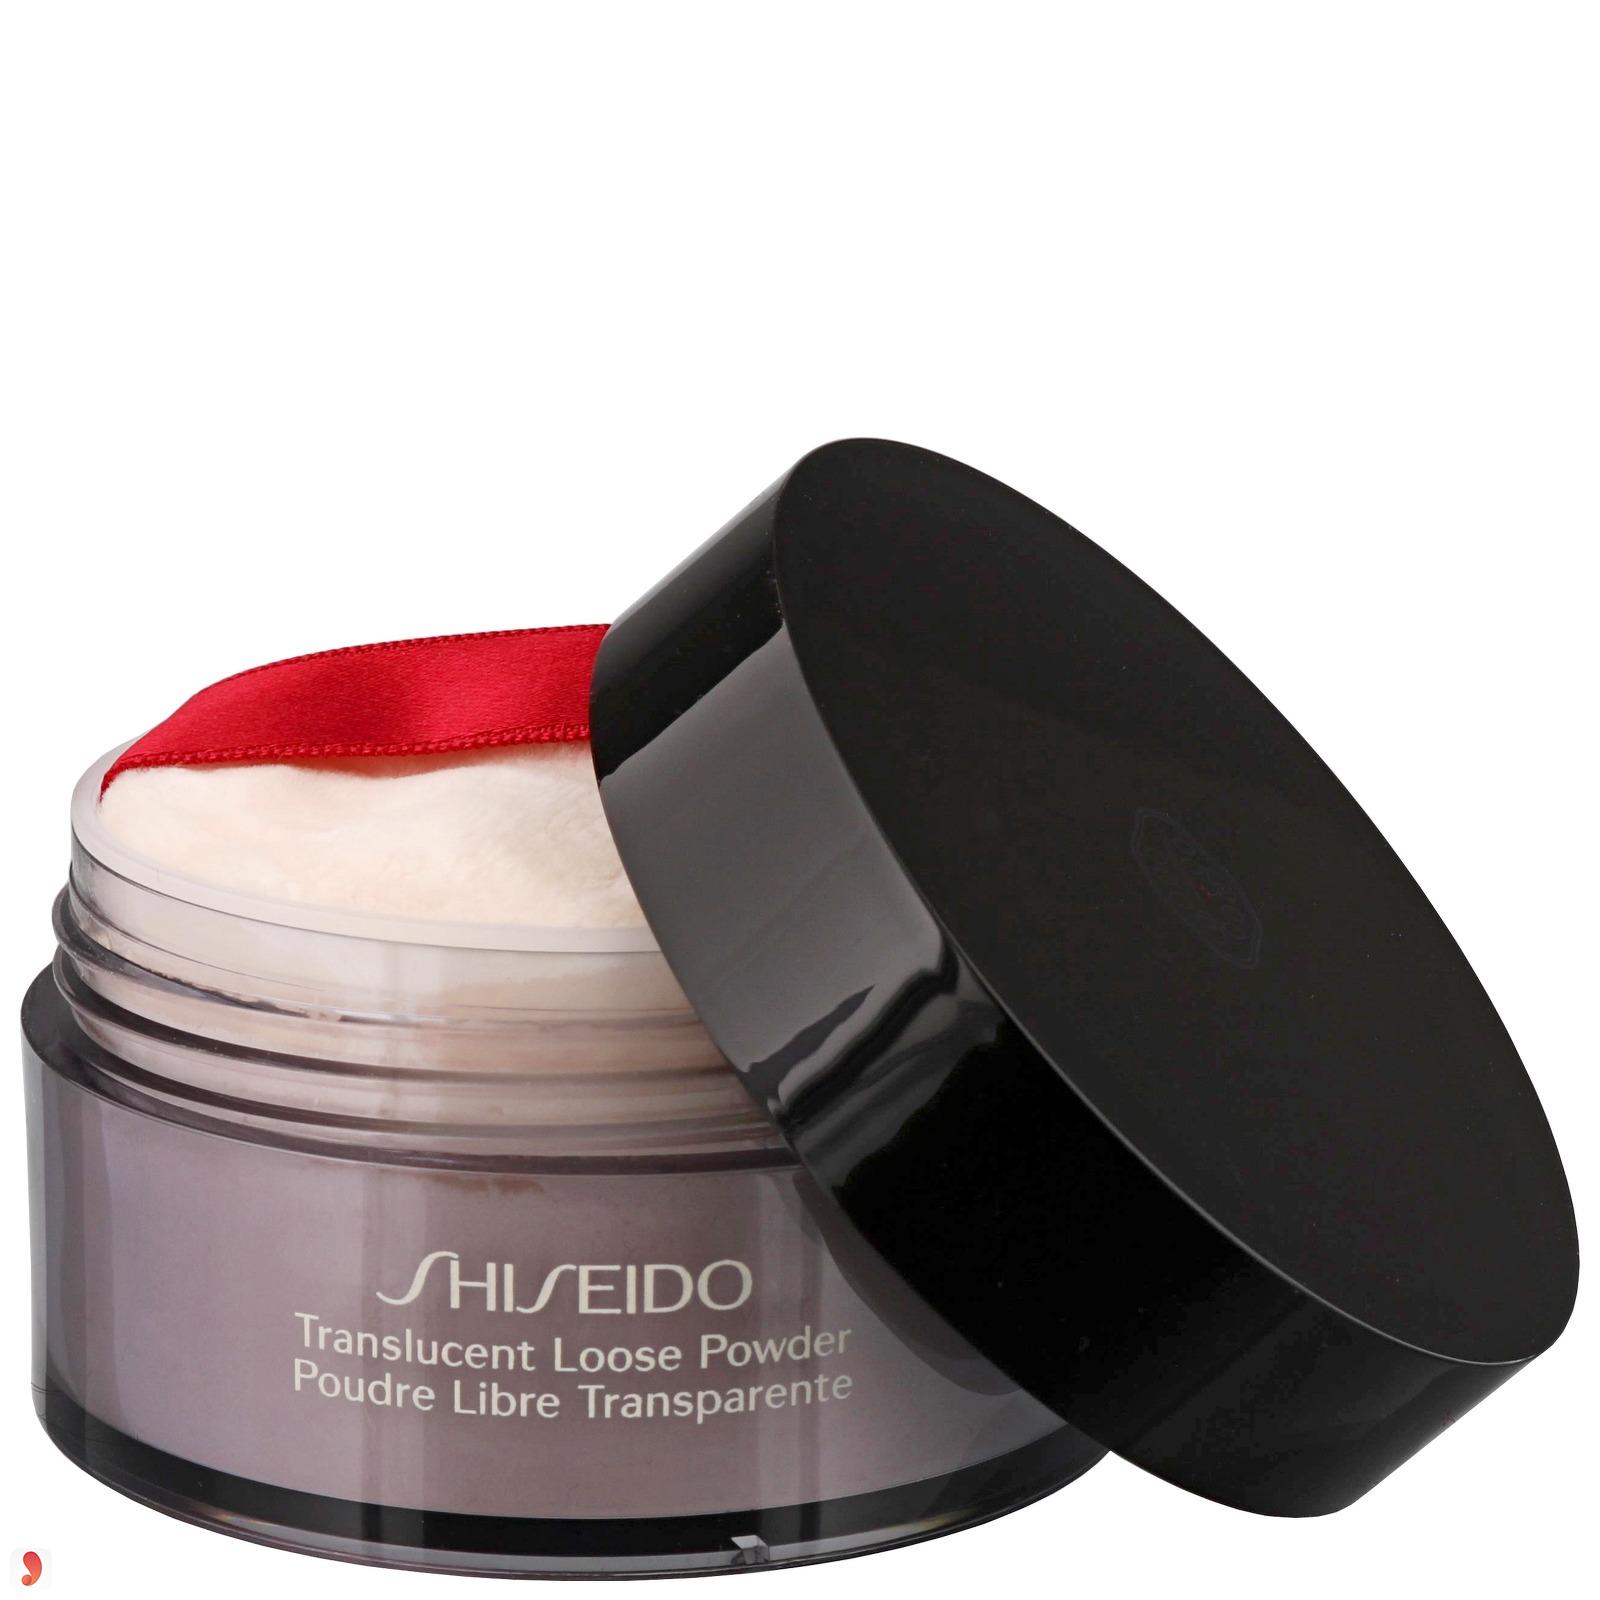 Shiseido Translucent loose powder